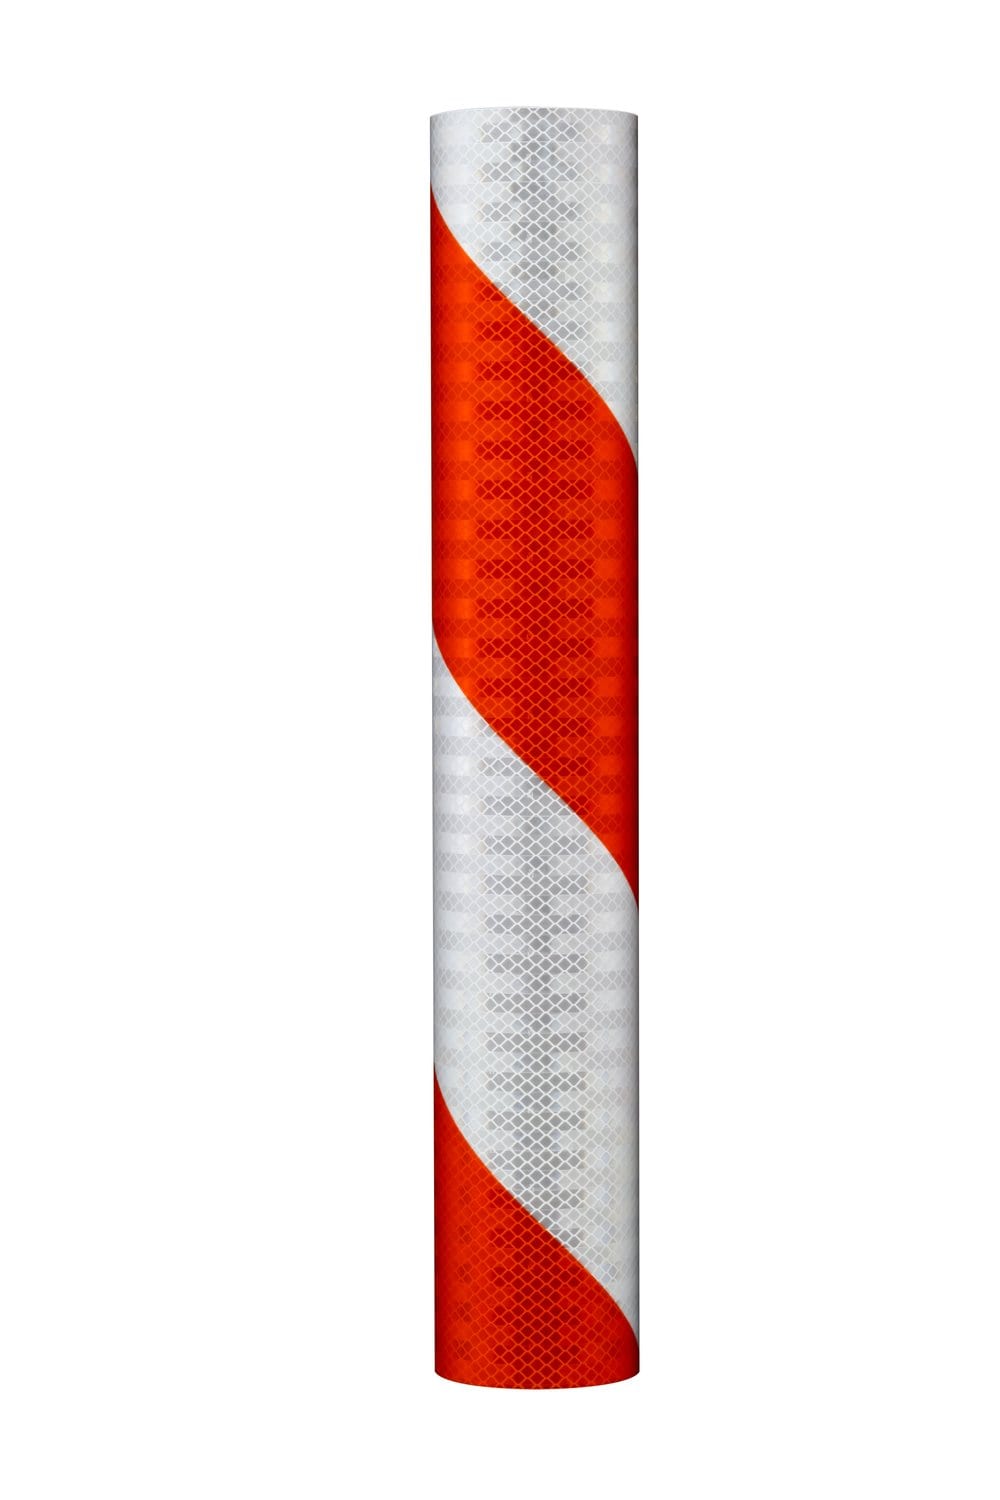 7010389480 - 3M Flexible Prismatic Reflective Barricade Sheeting 3334L Orange/White,
4 in stripe/left, 7.75 in x 50 yd